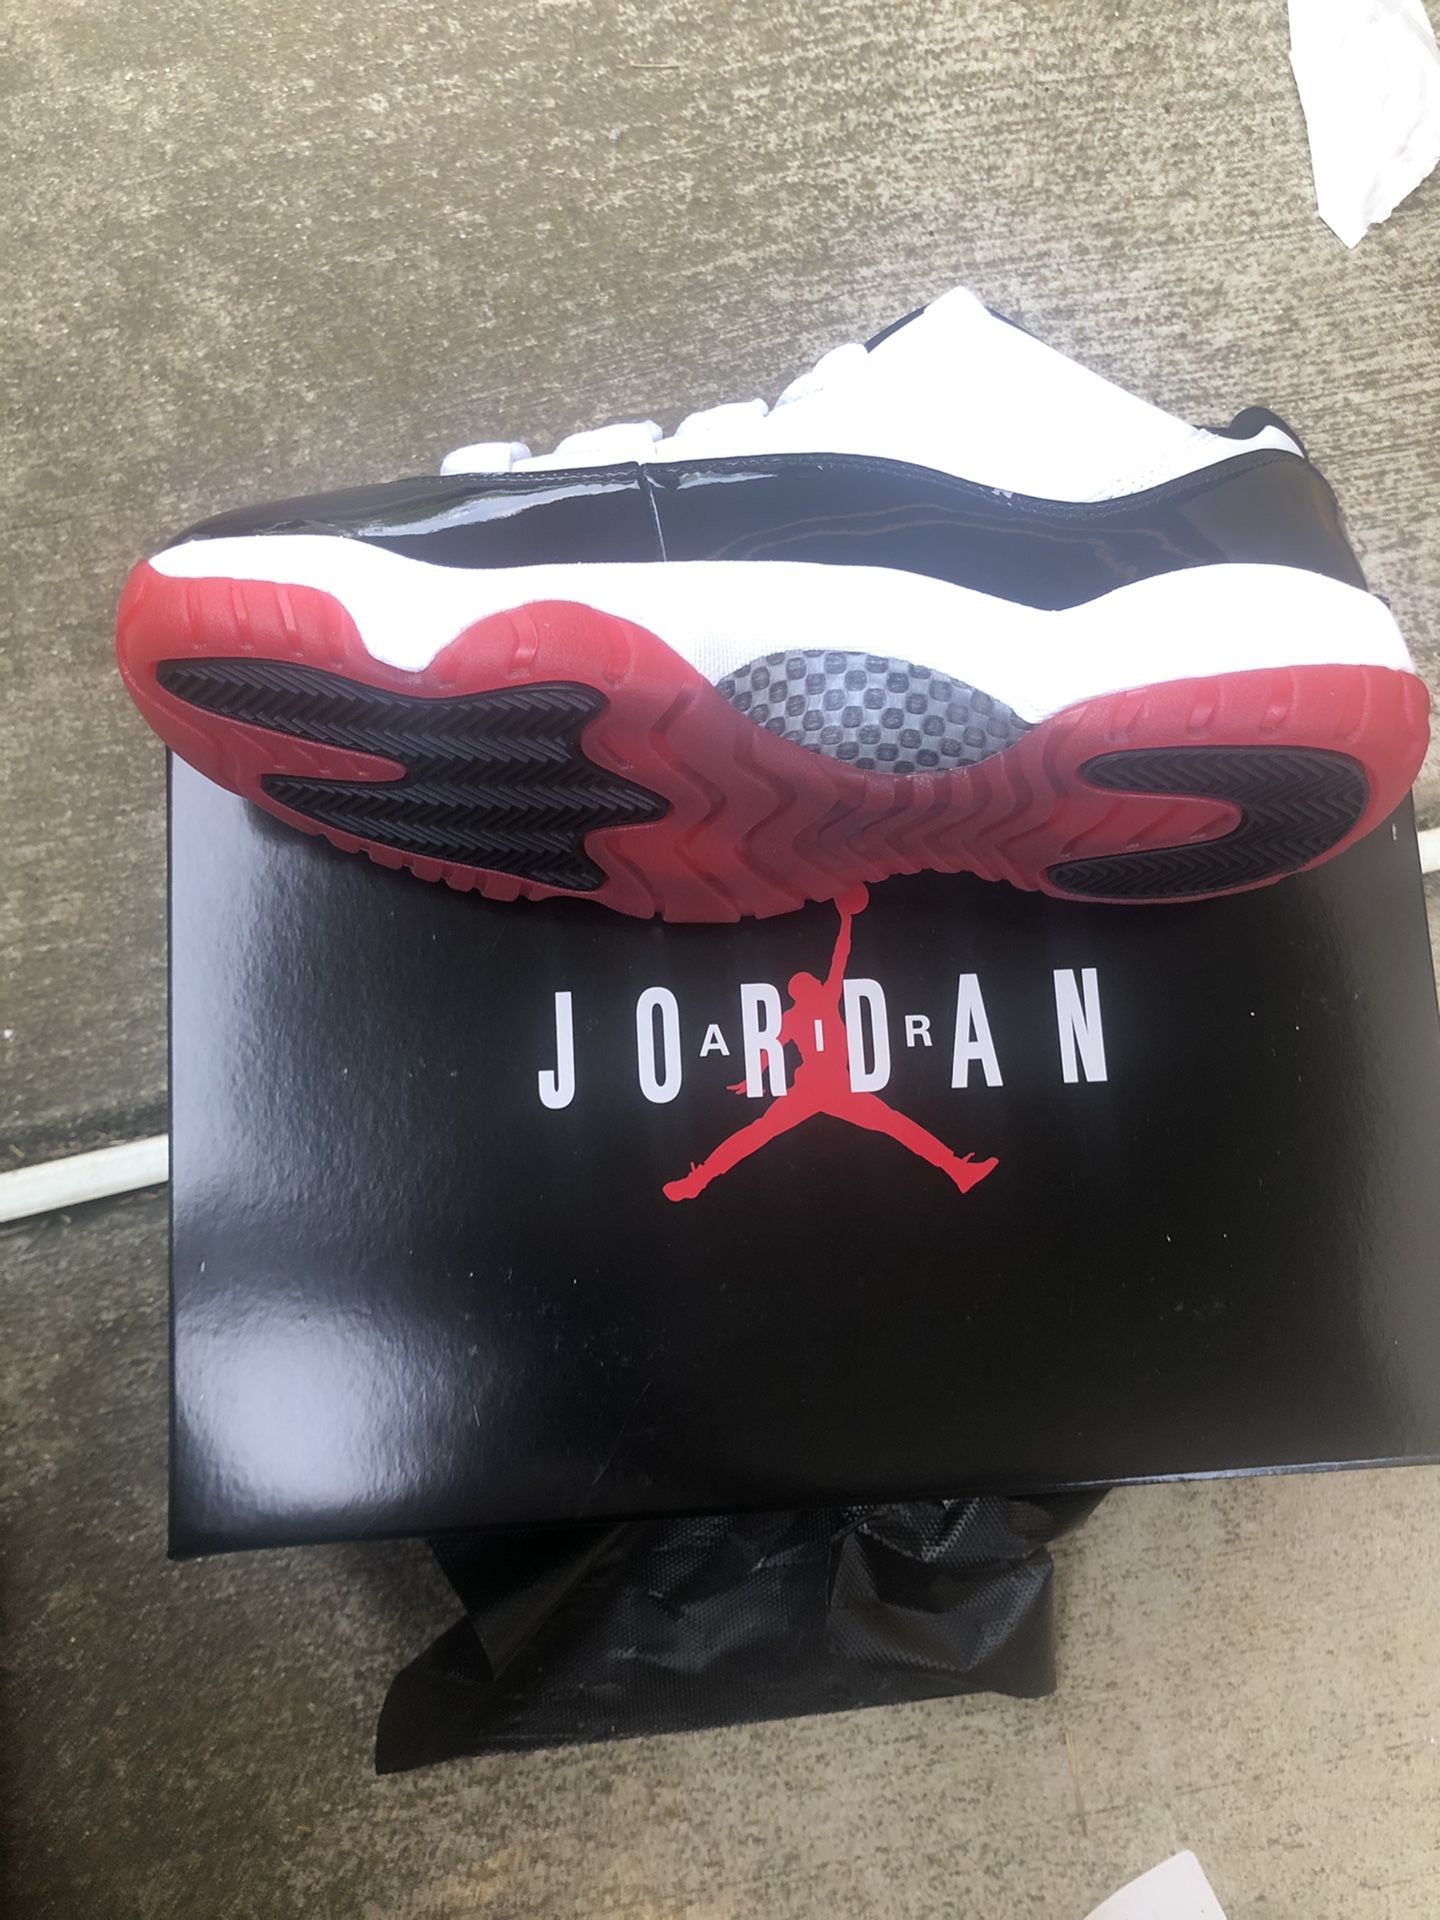 Jordan 11 Nike retro low bred concord sz 9 11 12